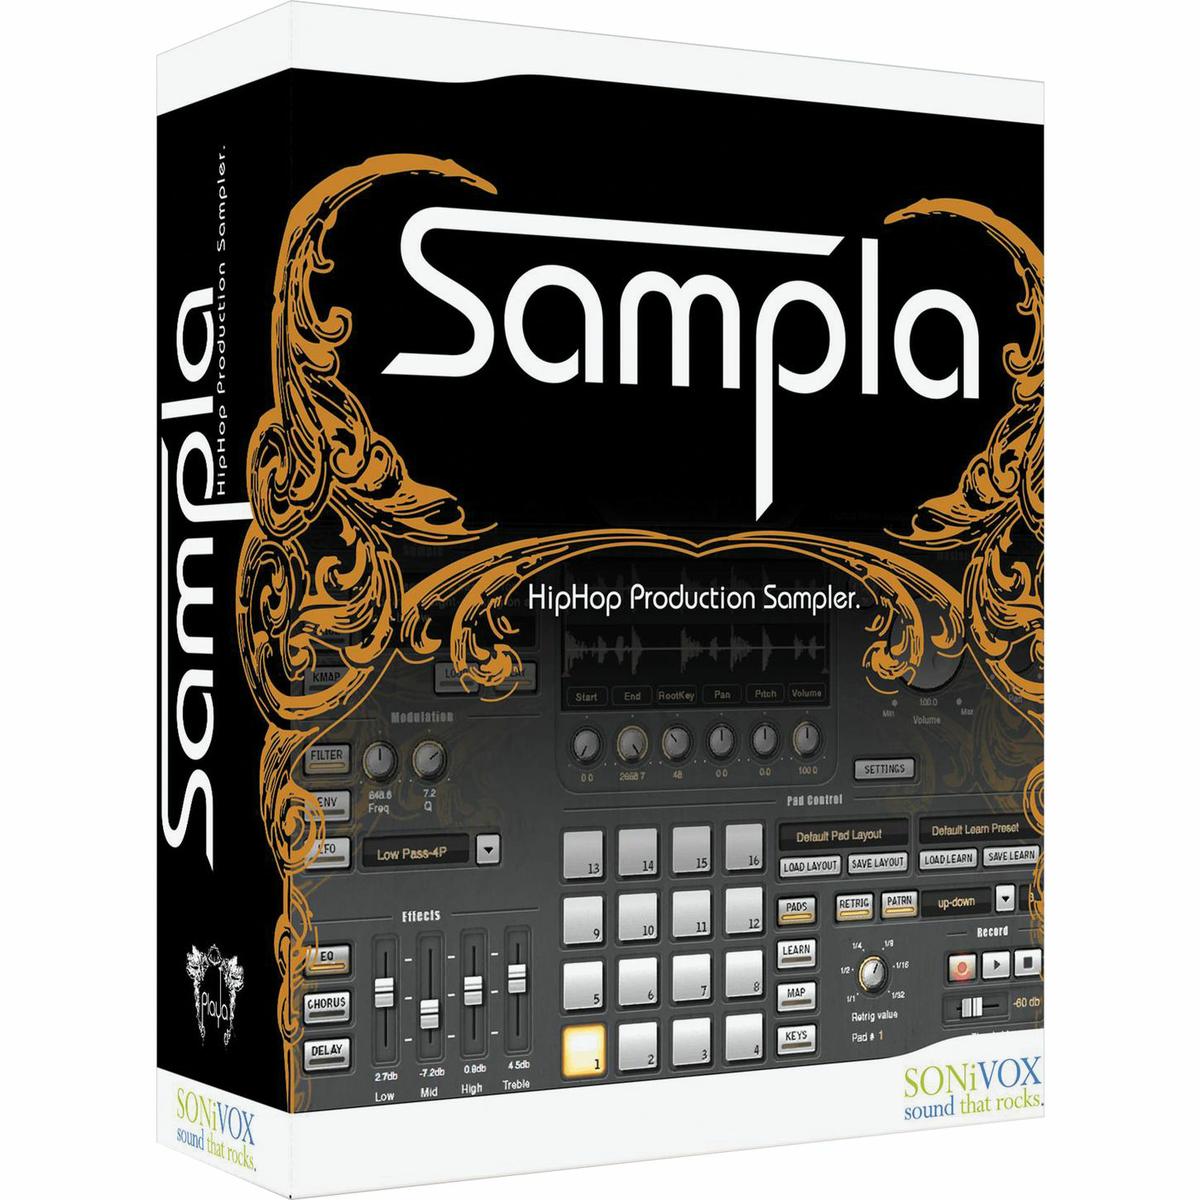 Foto Sonivox Sampla - Hip Hop Production Sampler Software